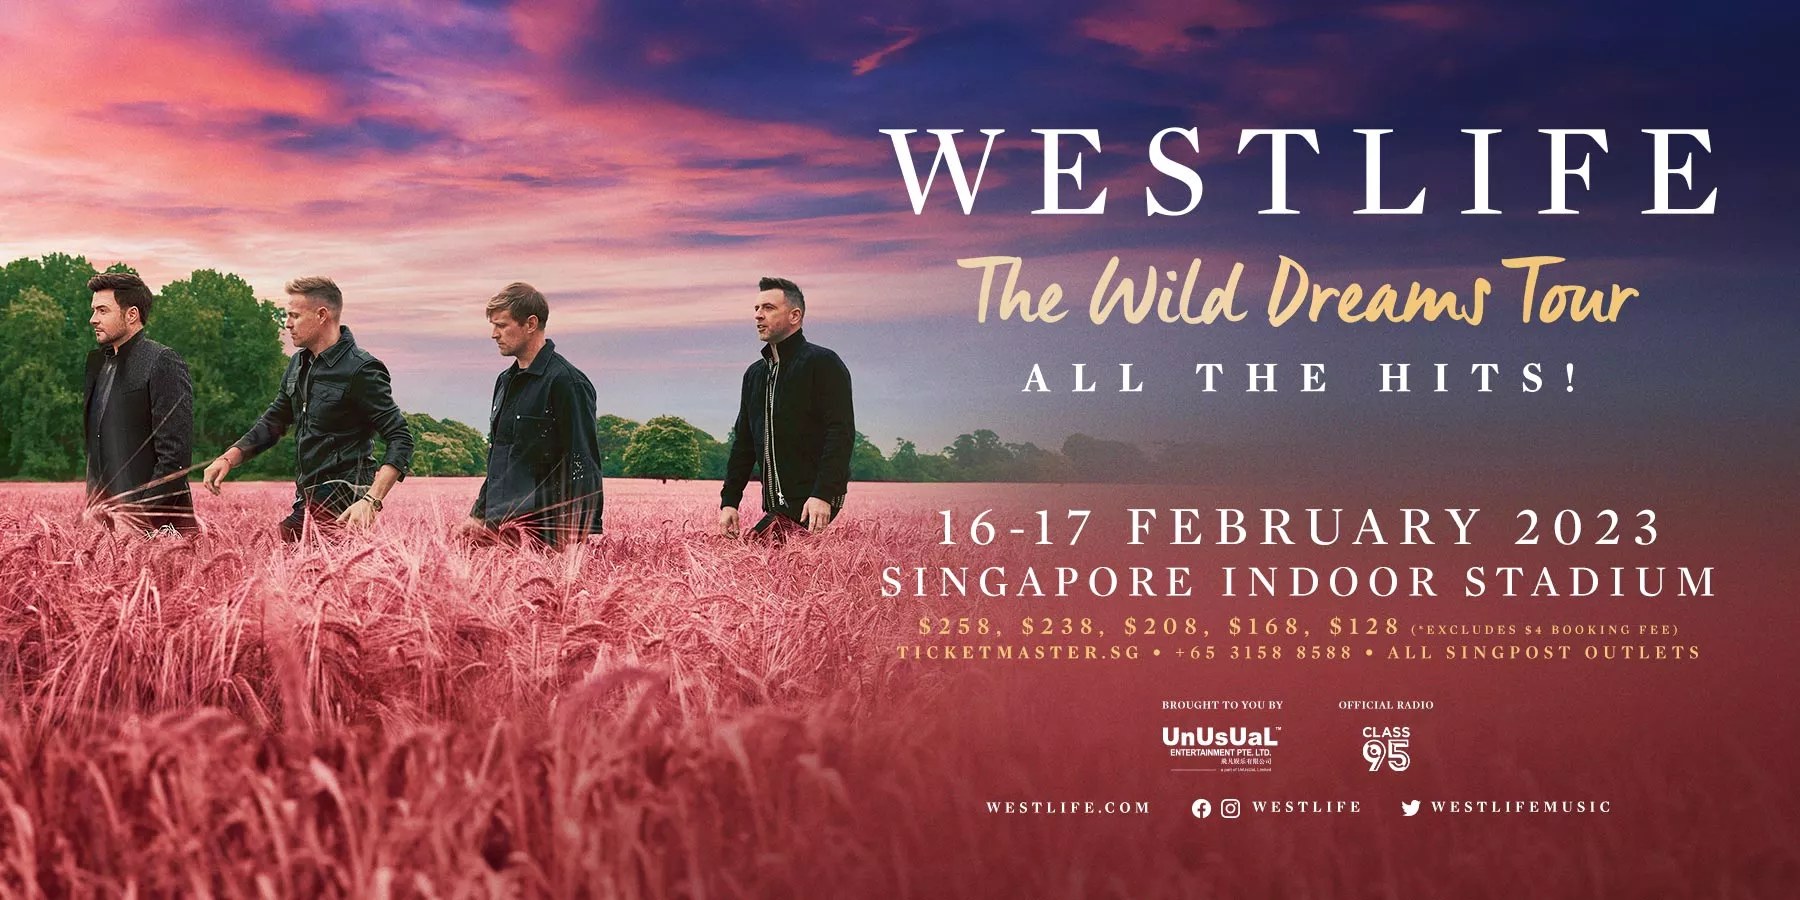 Westlife Concert 2023 The Wild Dreams Tour